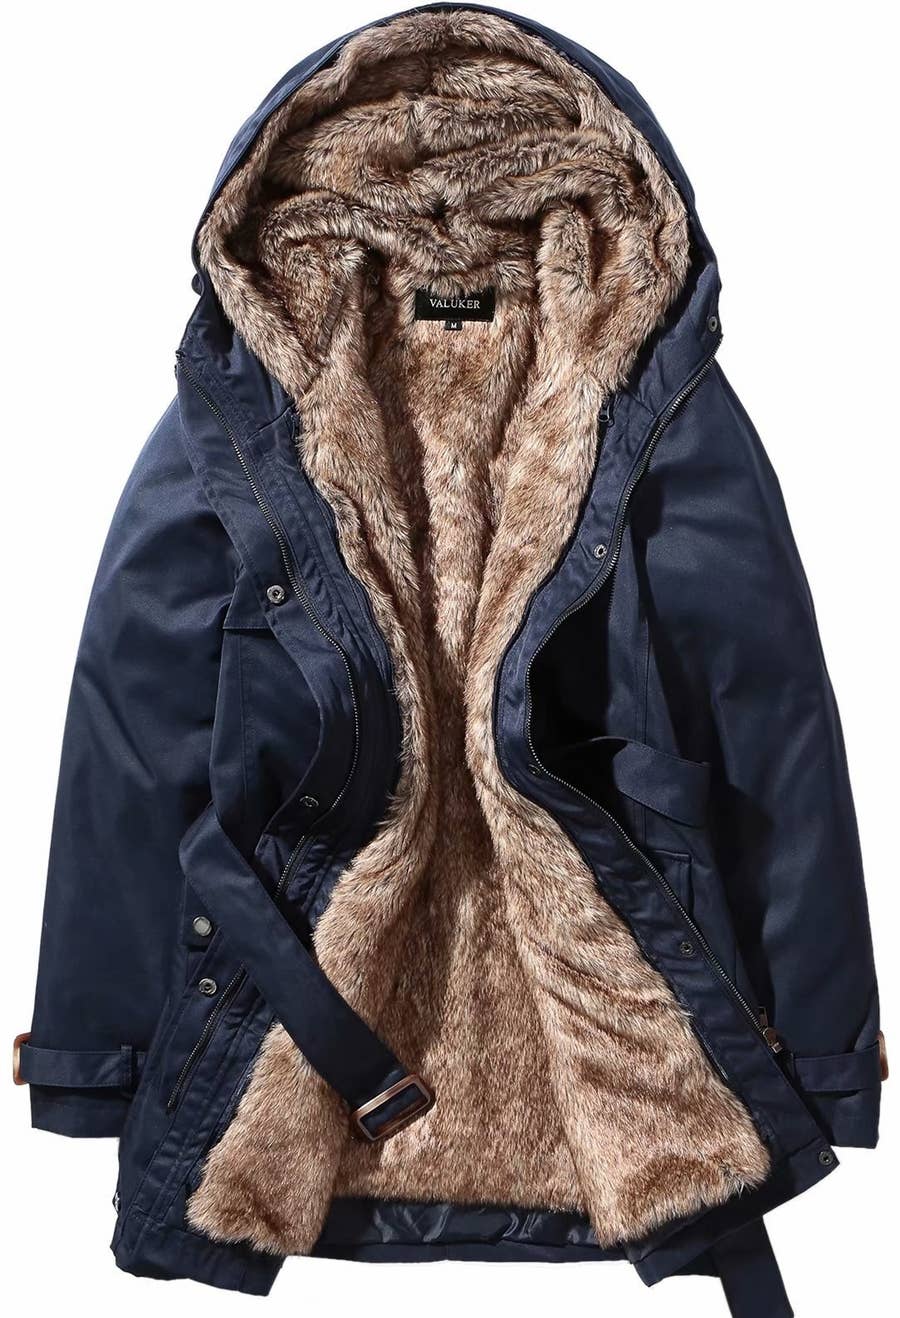 UOFOCO Womens Warm Faux Fur Coat Ladies Solid Jacket Winter Gradient Parka Outerwear 